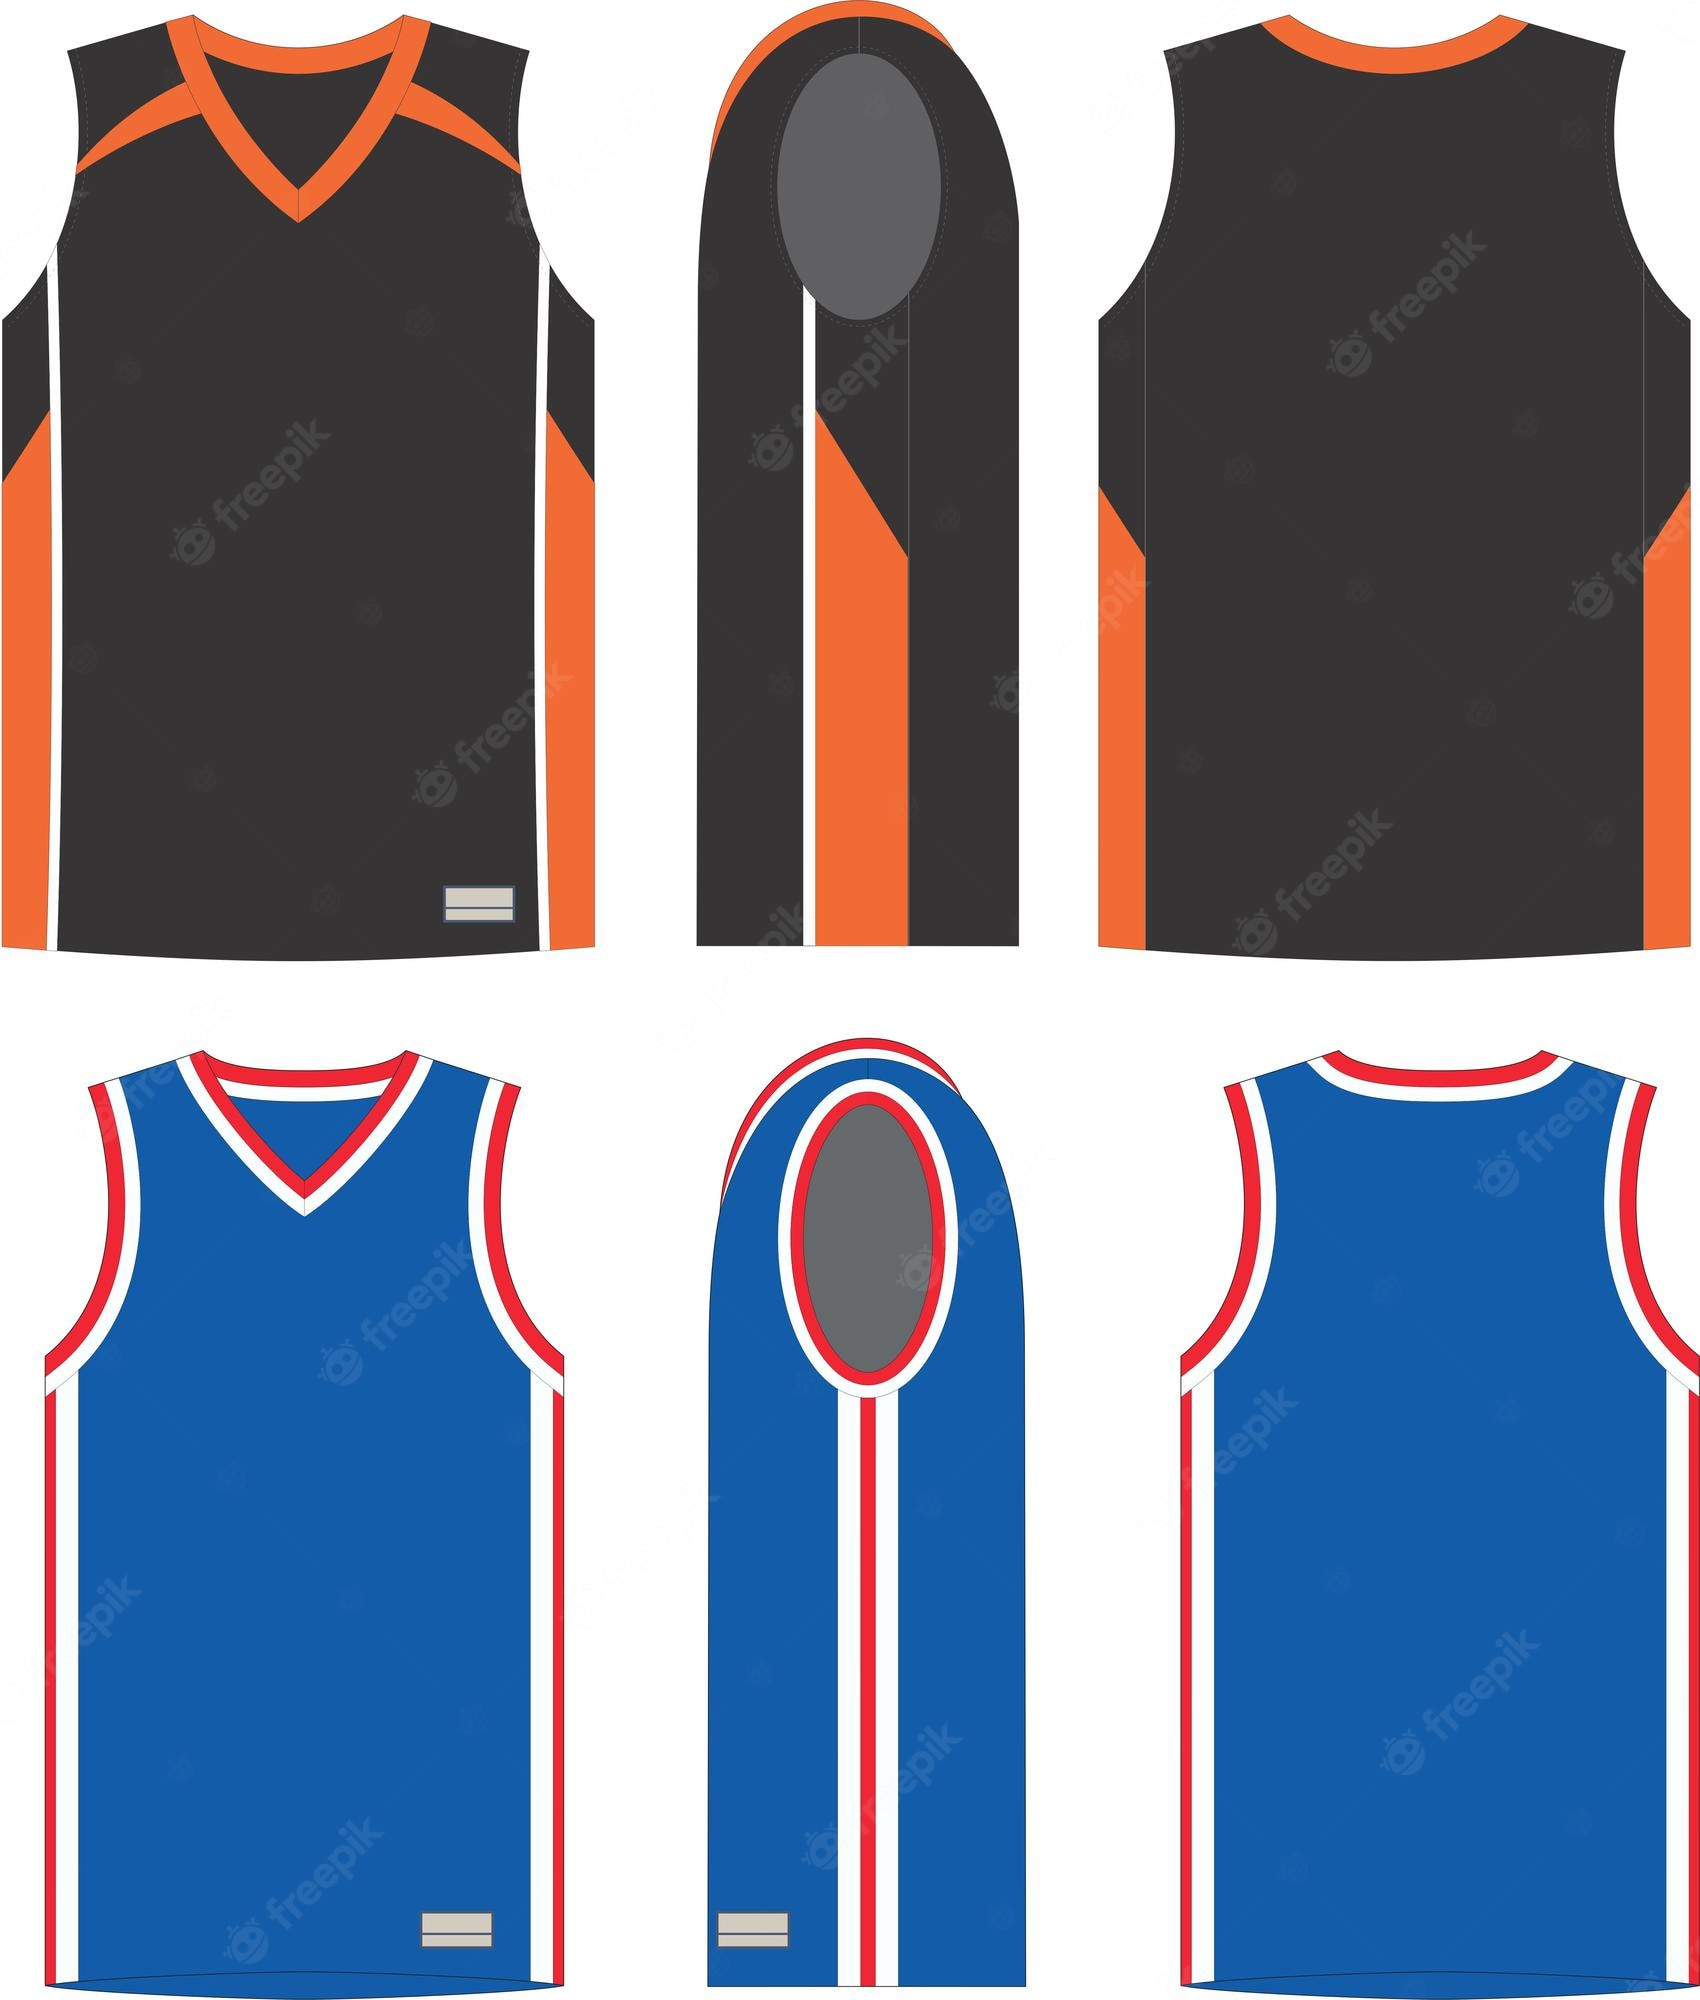 Premium Vector  Basketball uniform jerseys front and back view  Regarding Blank Basketball Uniform Template